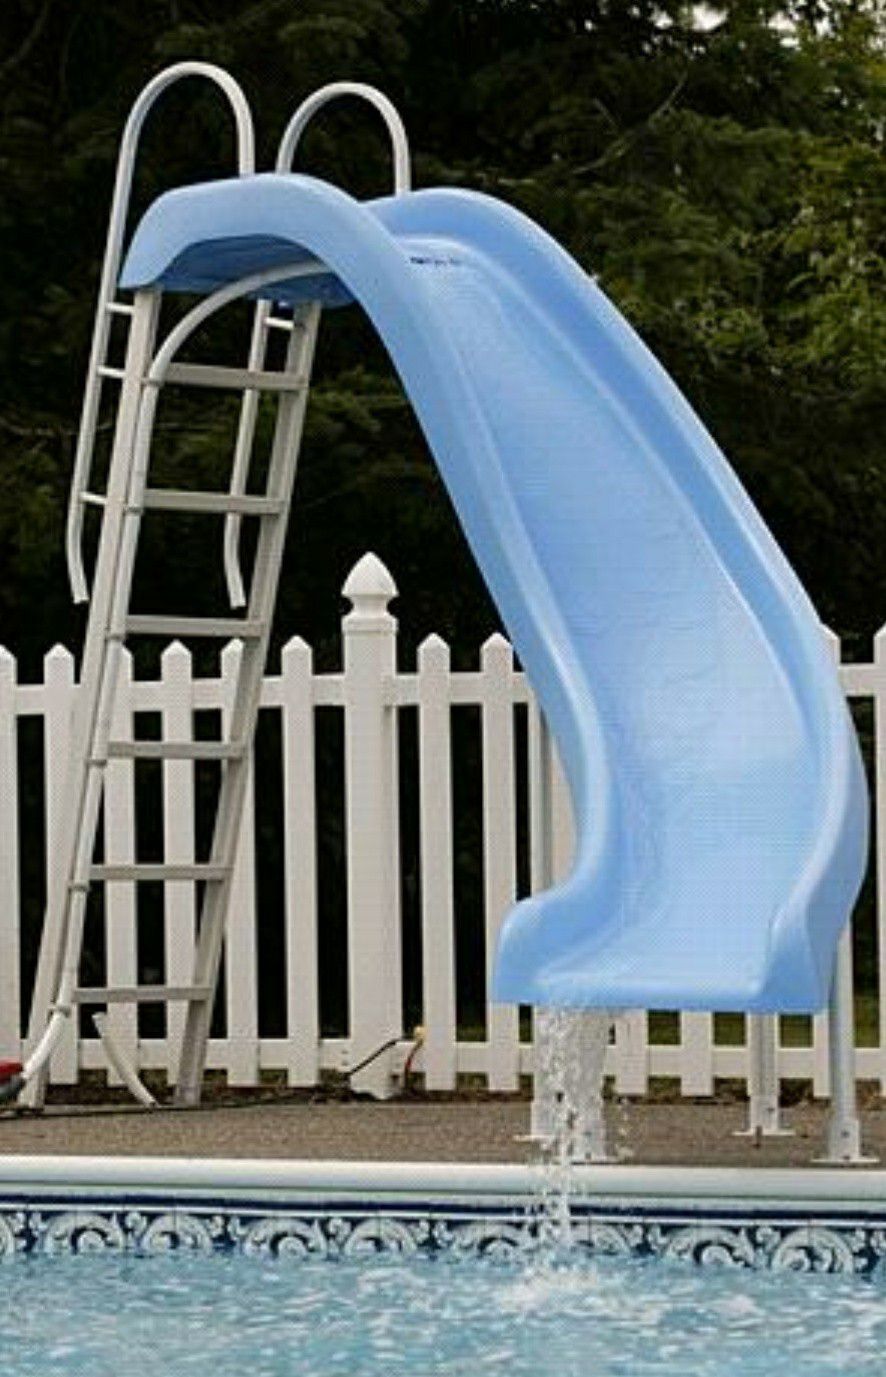 Blue fiberglass pool slide